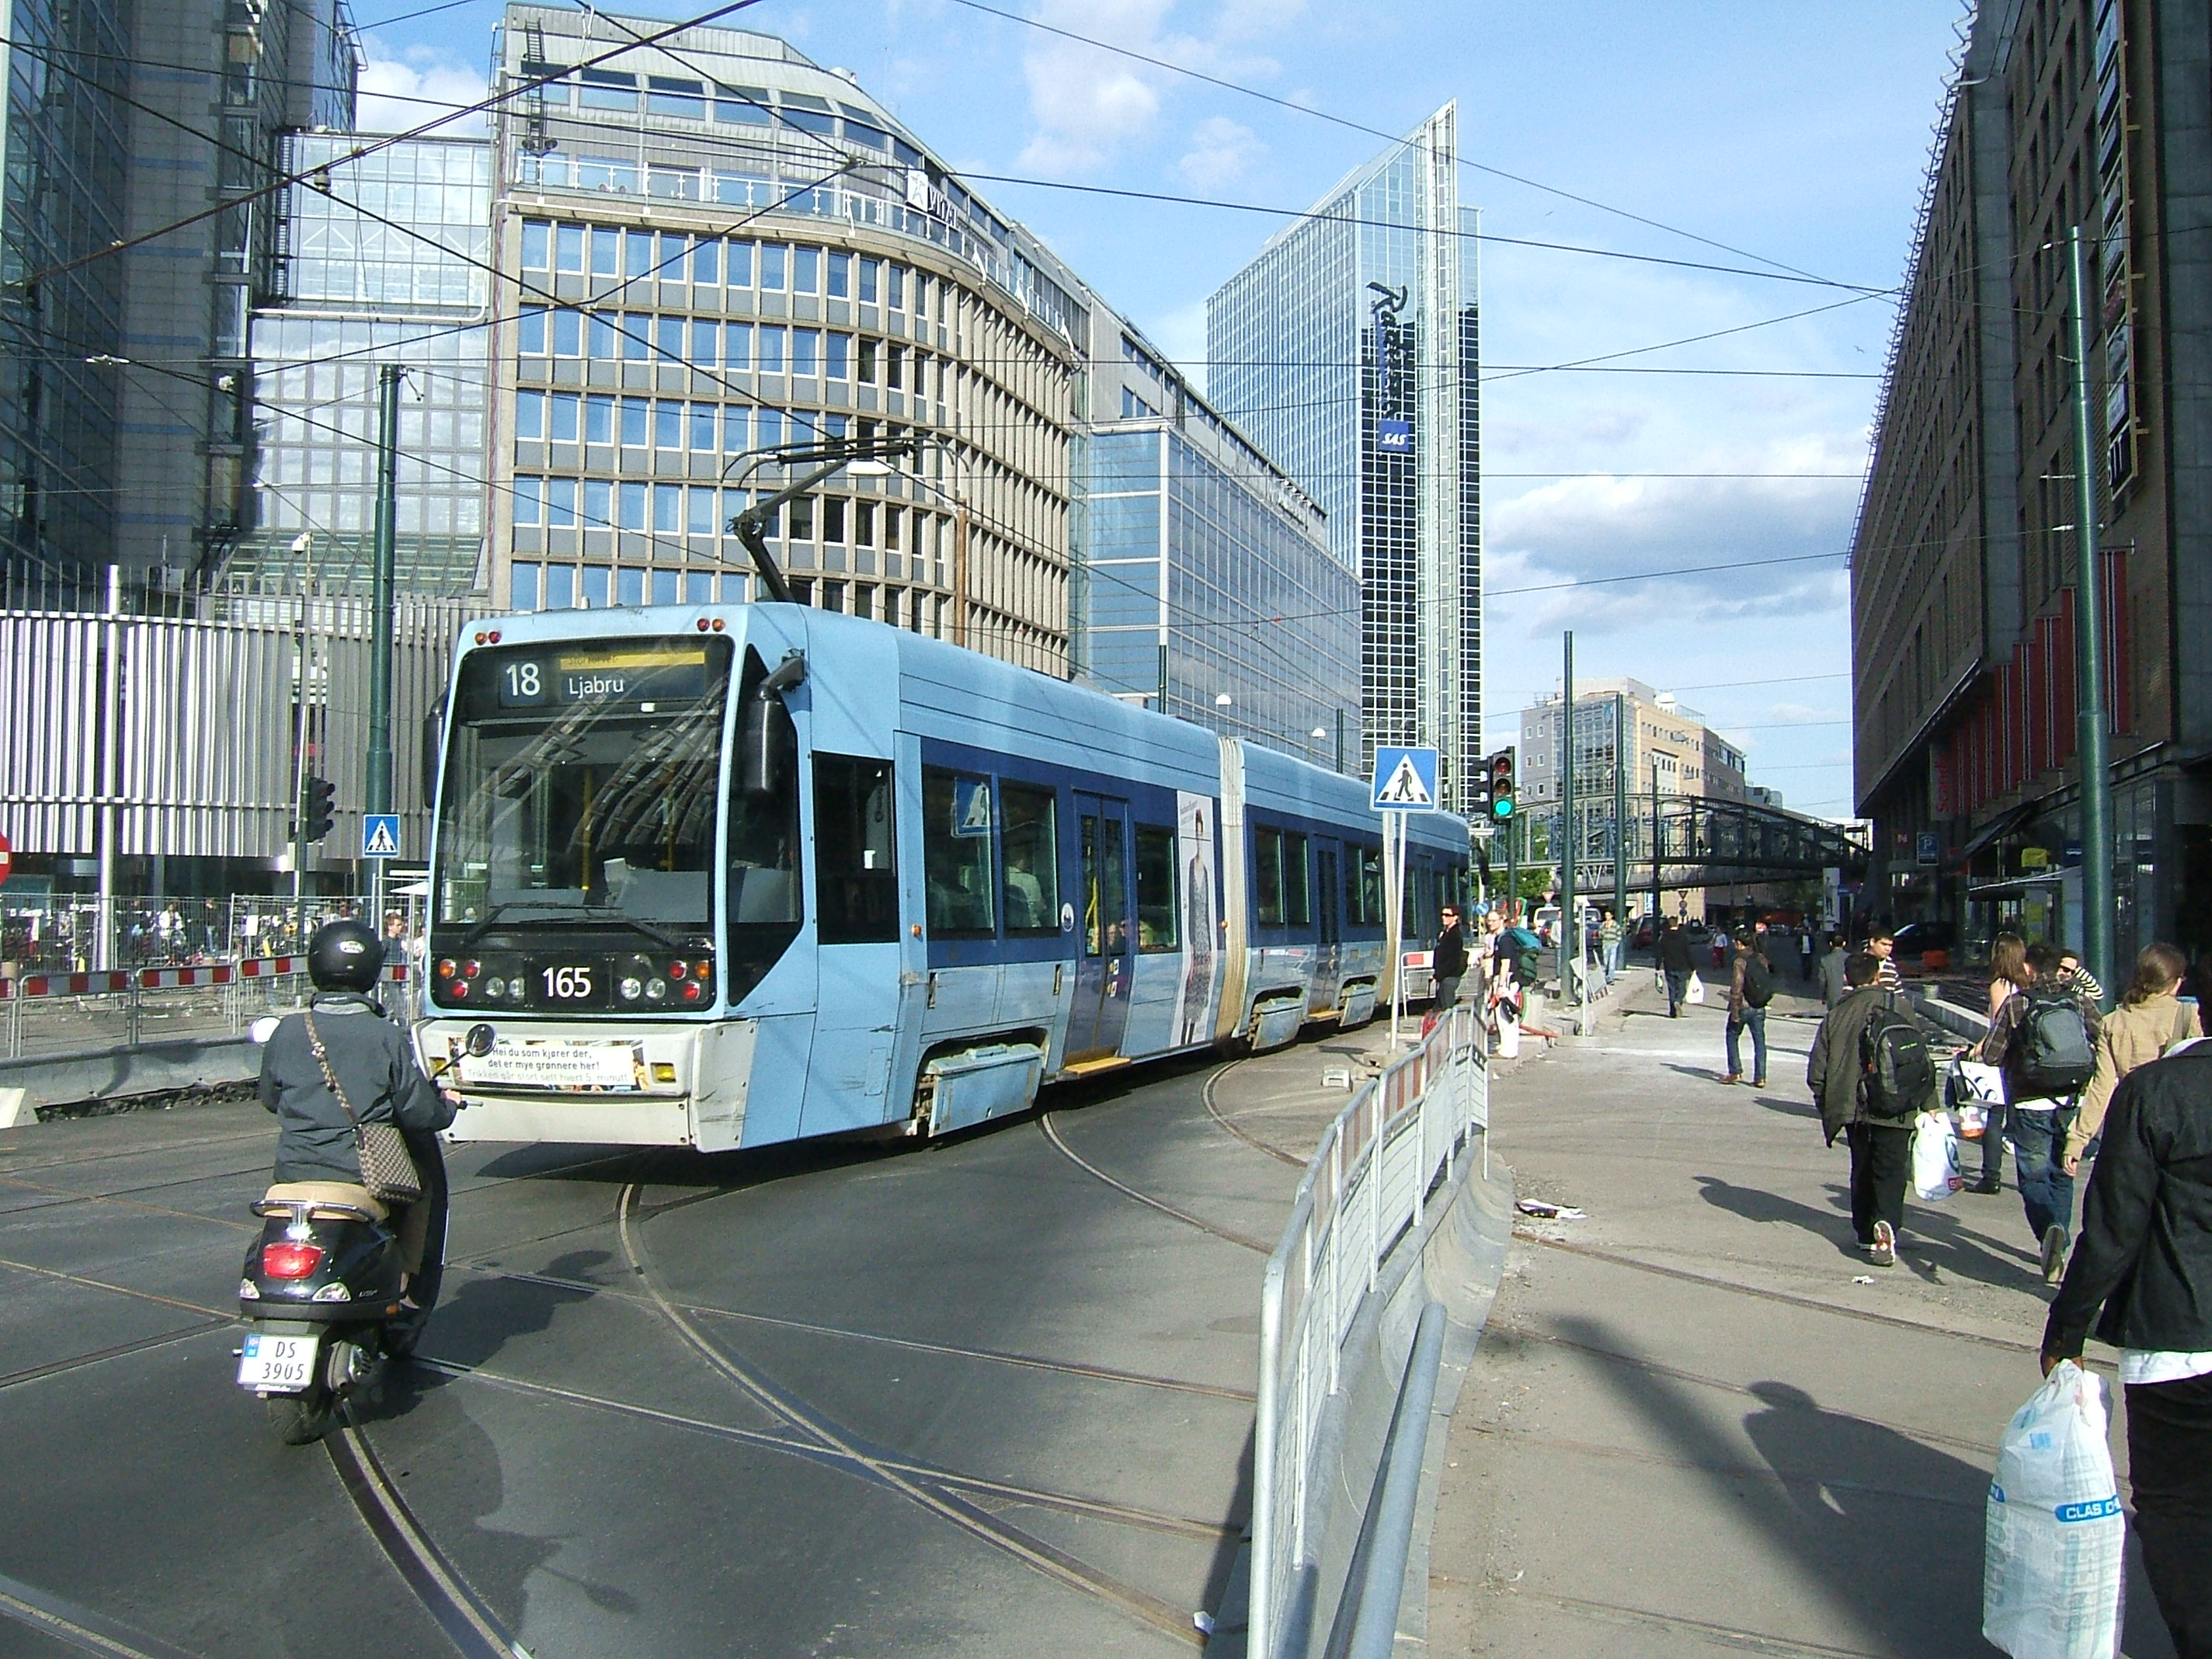 Oslo_tram_1.jpg